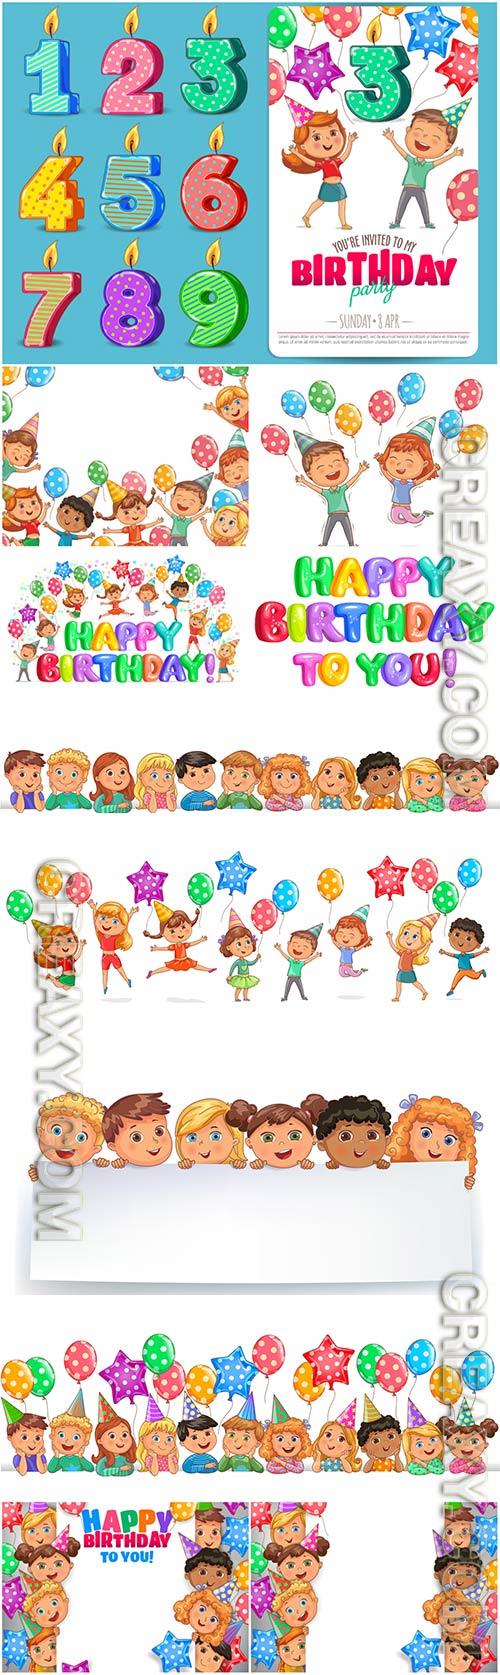 Children's birthday in cartoon style in vector